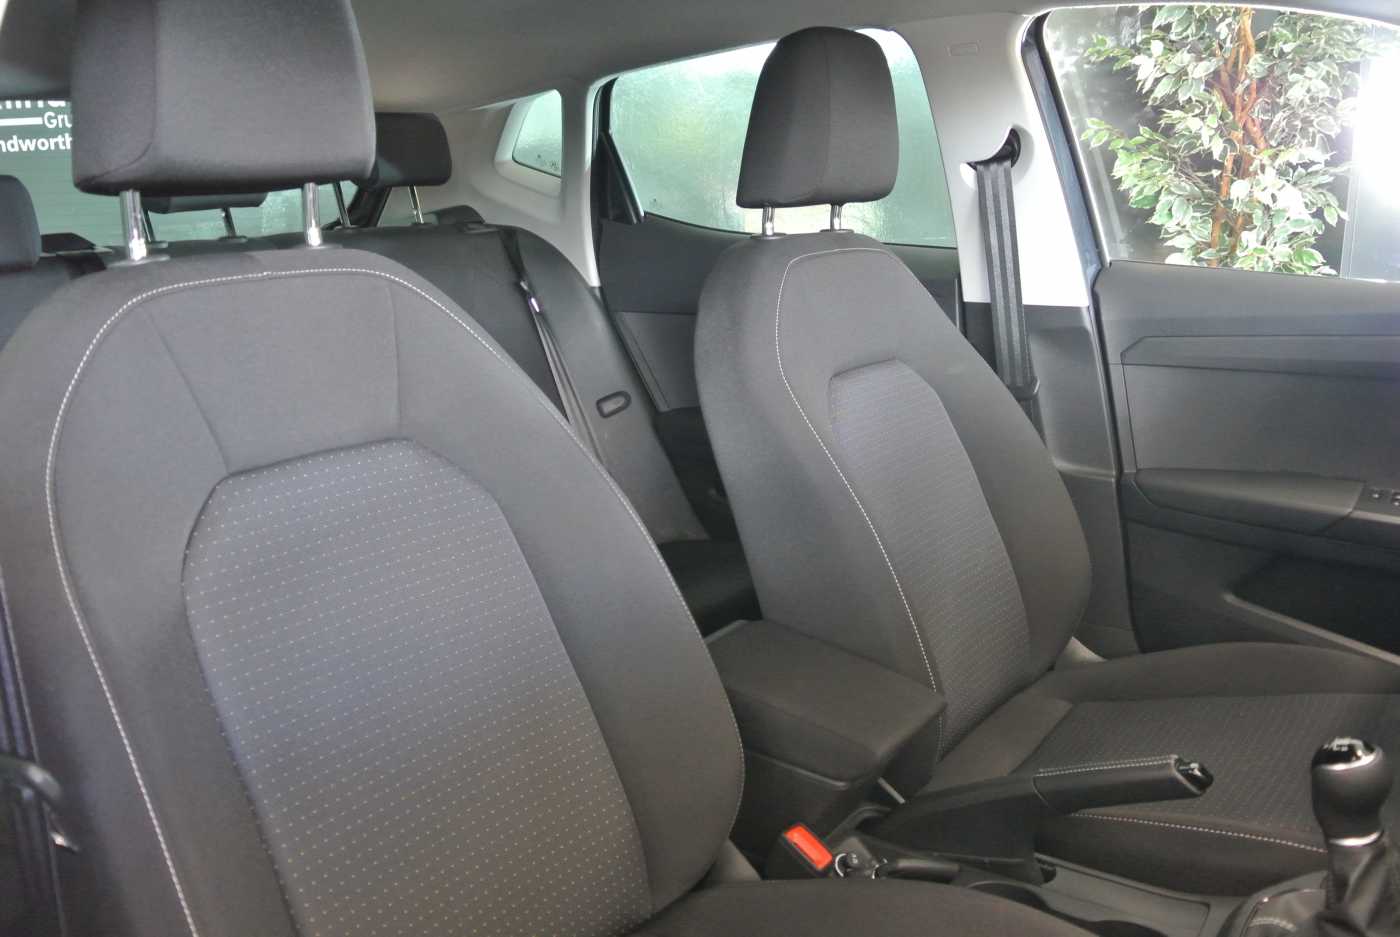 Seat Ibiza 1.0 MPI Style *KLIMA/SITZHEIZUNG* used buy in Hamburg Price  10900 eur - Int.Nr.: HA-9836 SOLD